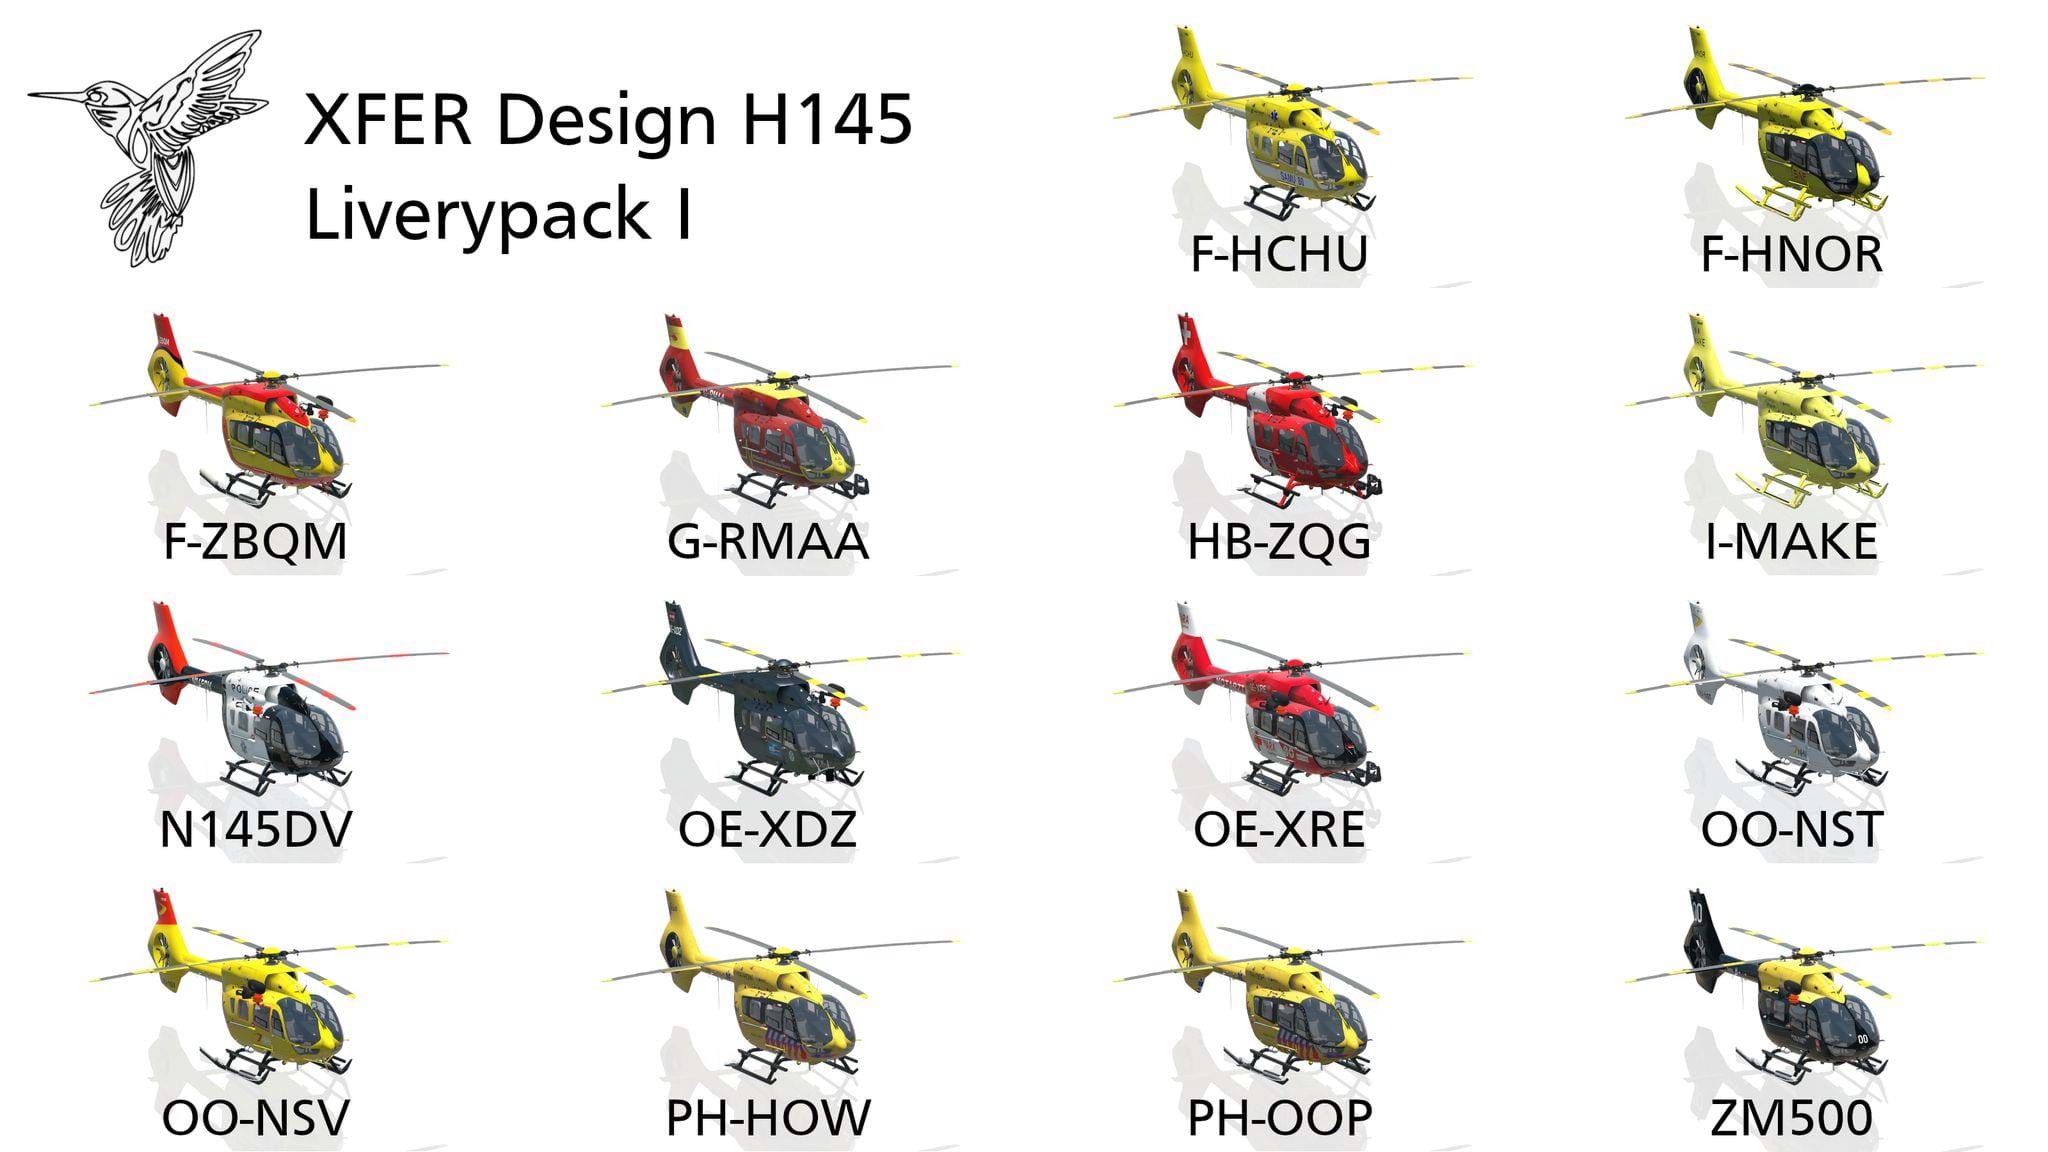 XFER Design H145 livery pack 1